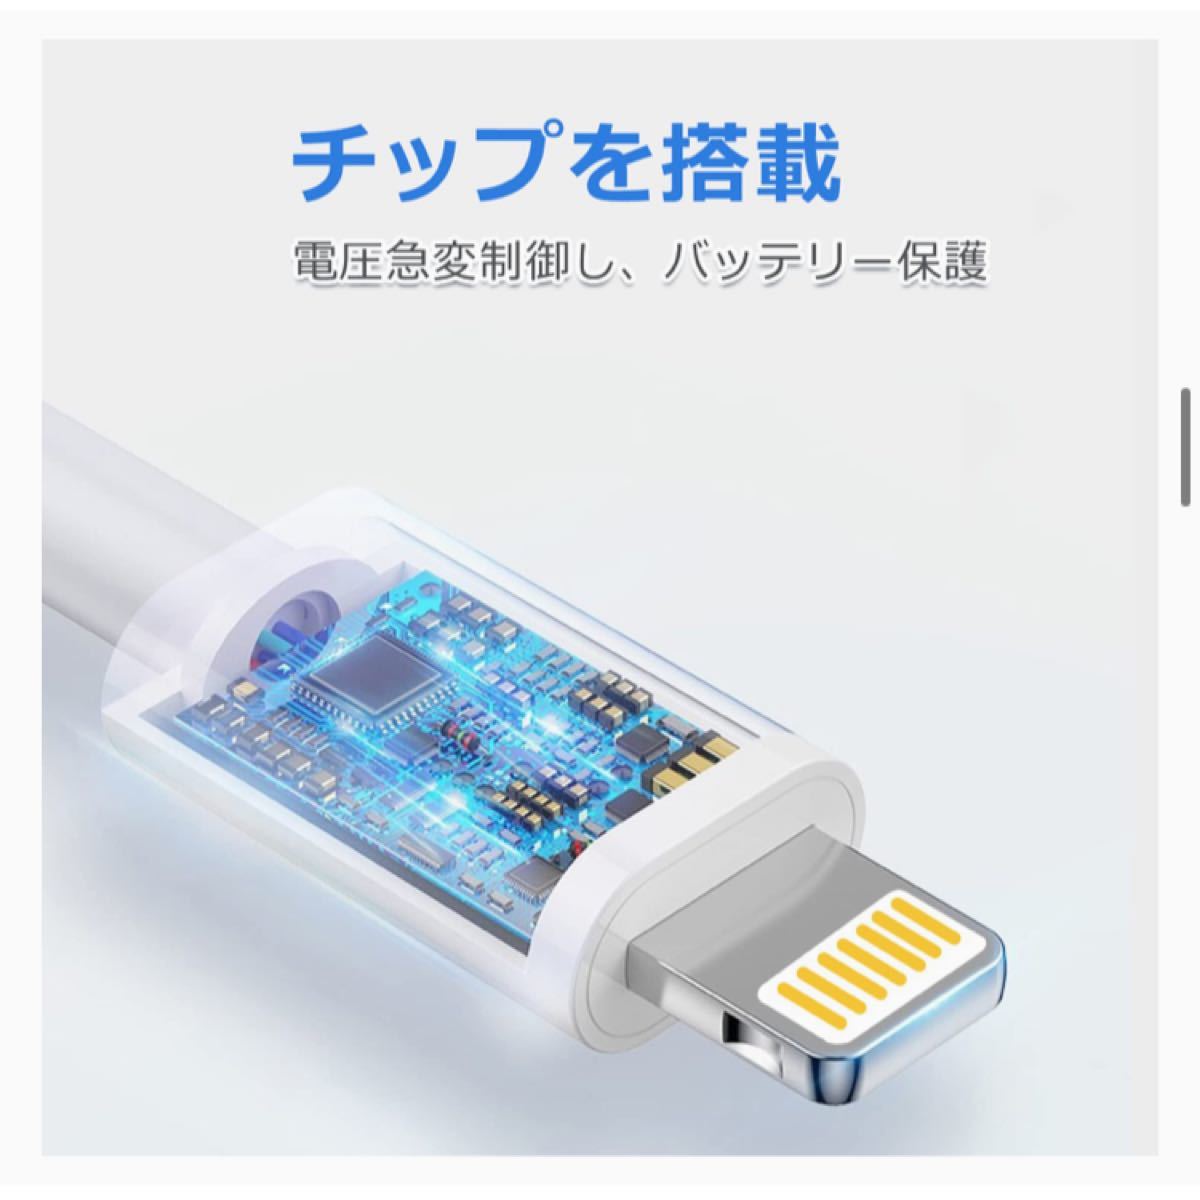 USB-C Lightningケーブル タイプC iphone 充電ケーブル ライトニングケーブル iPhone 1M 2本セット